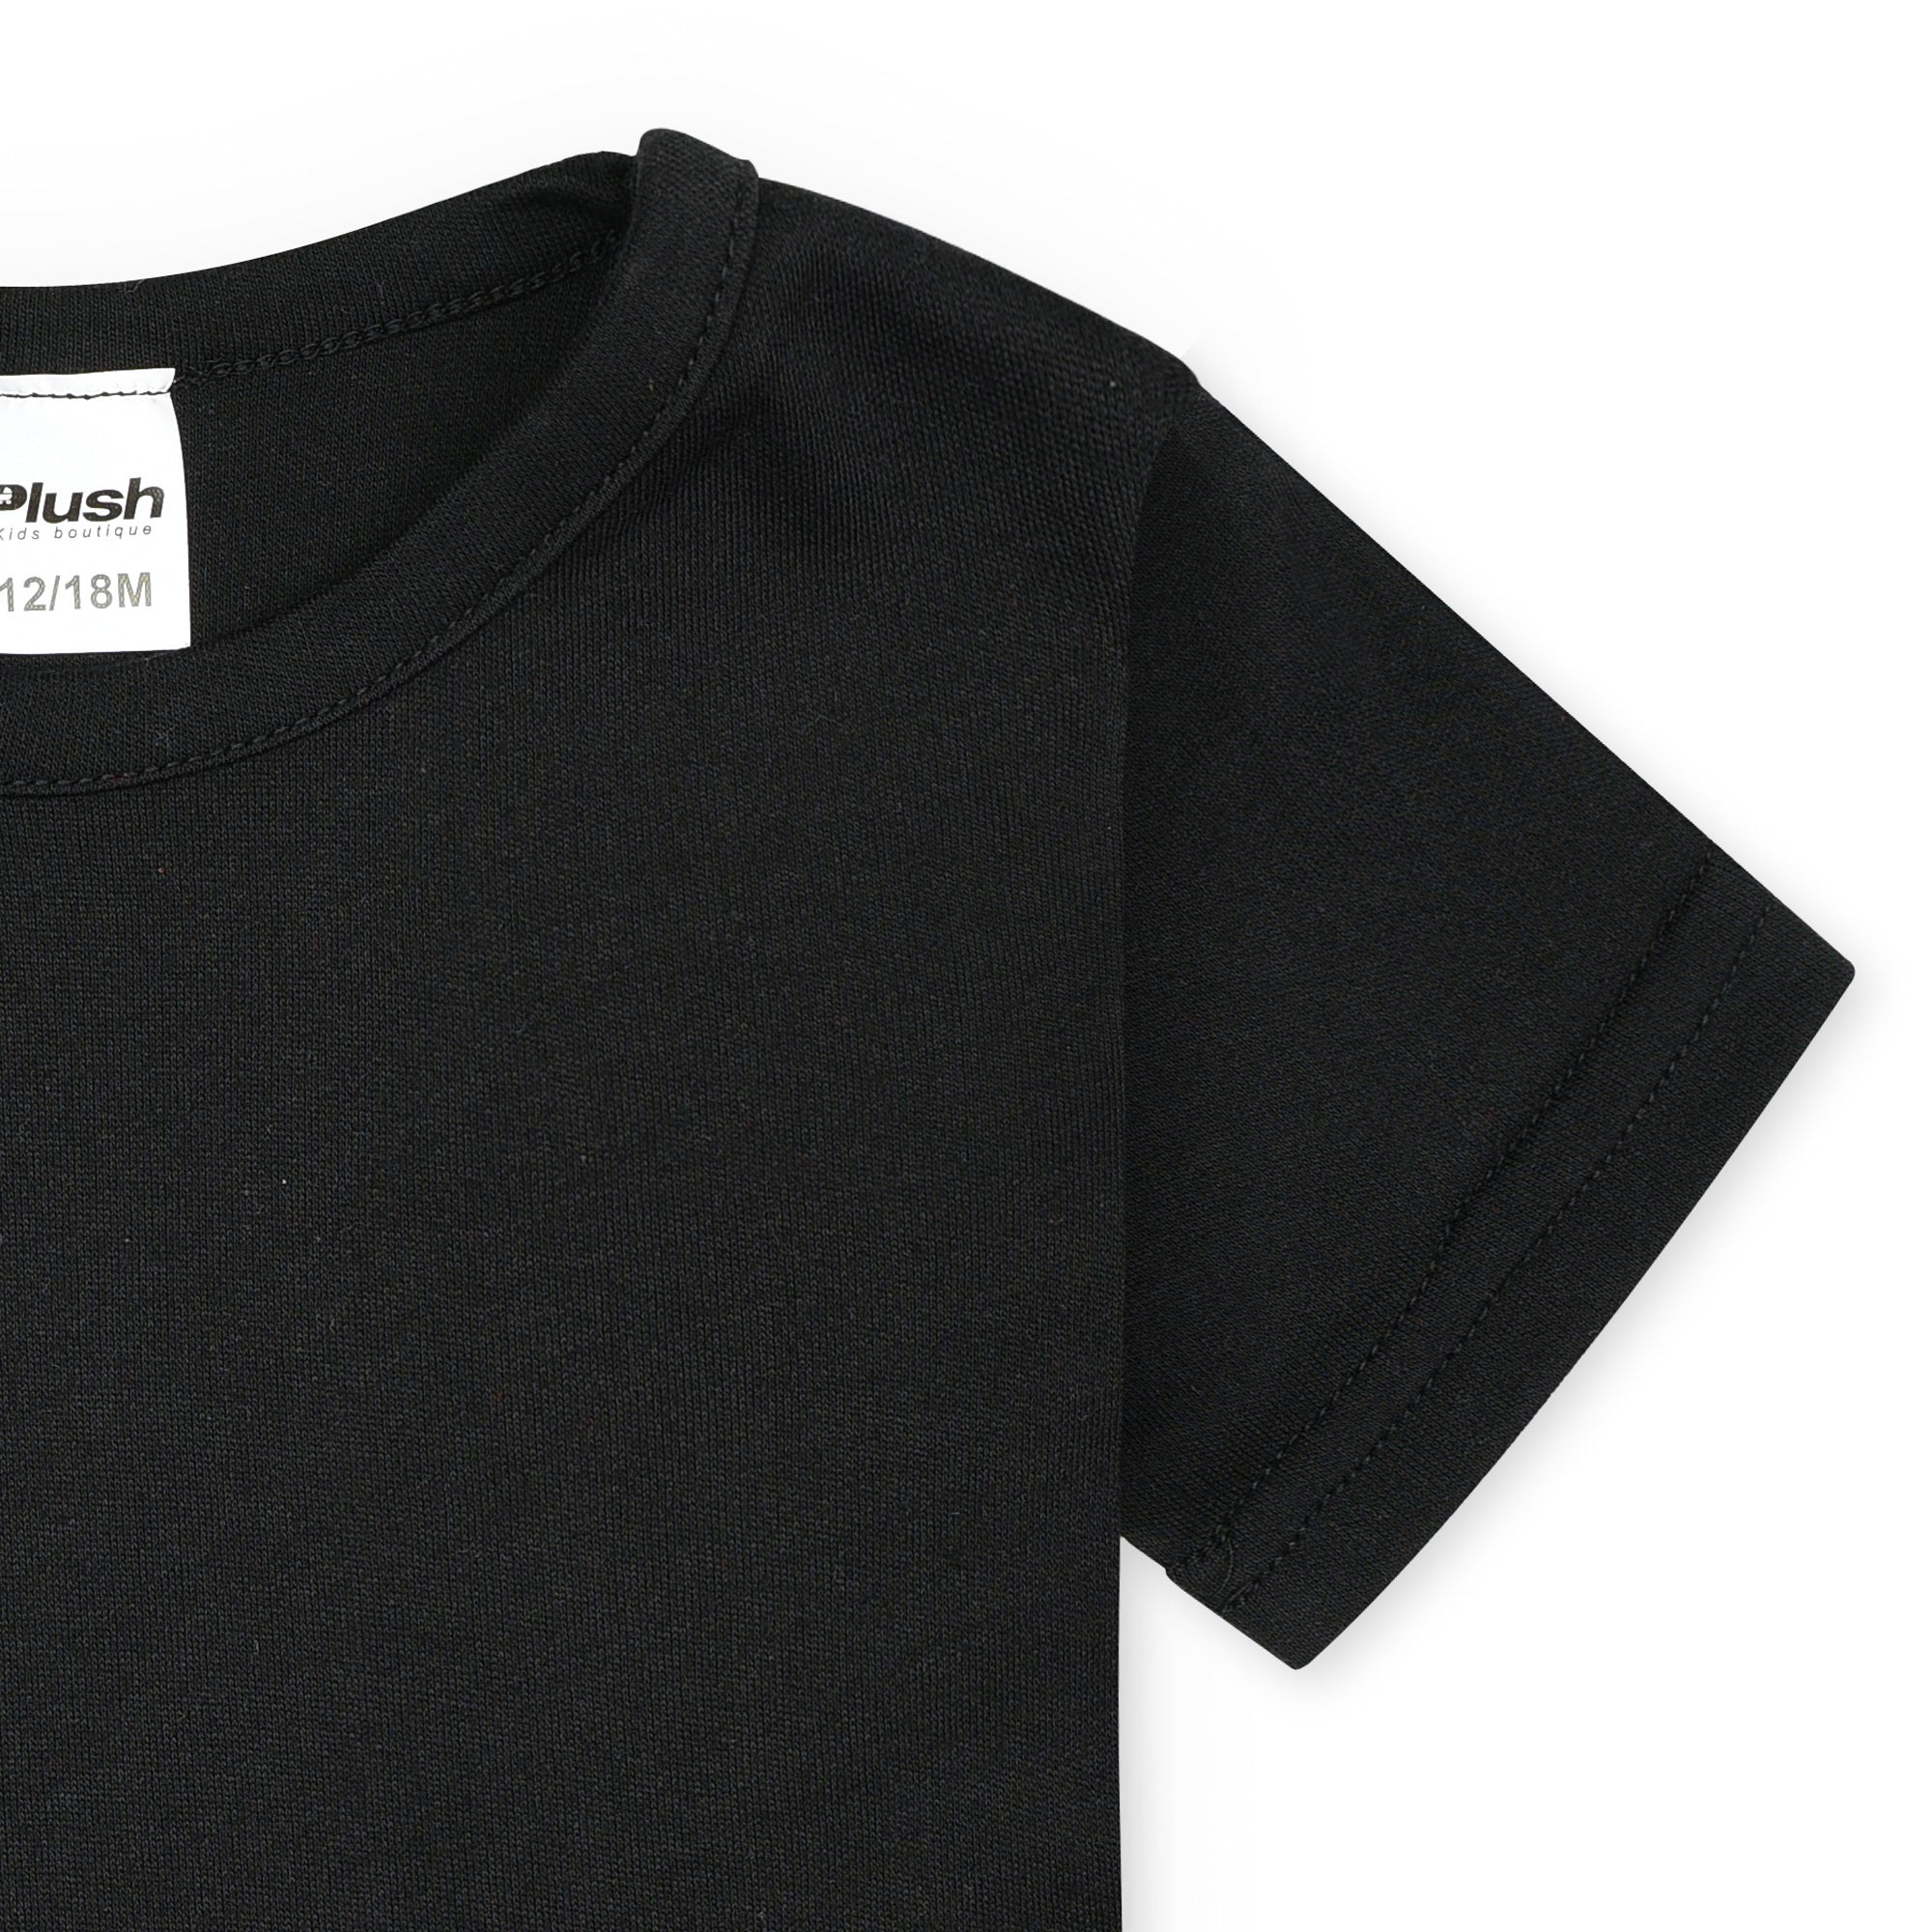 Plush-Premium Basics Casual Wear Set Black